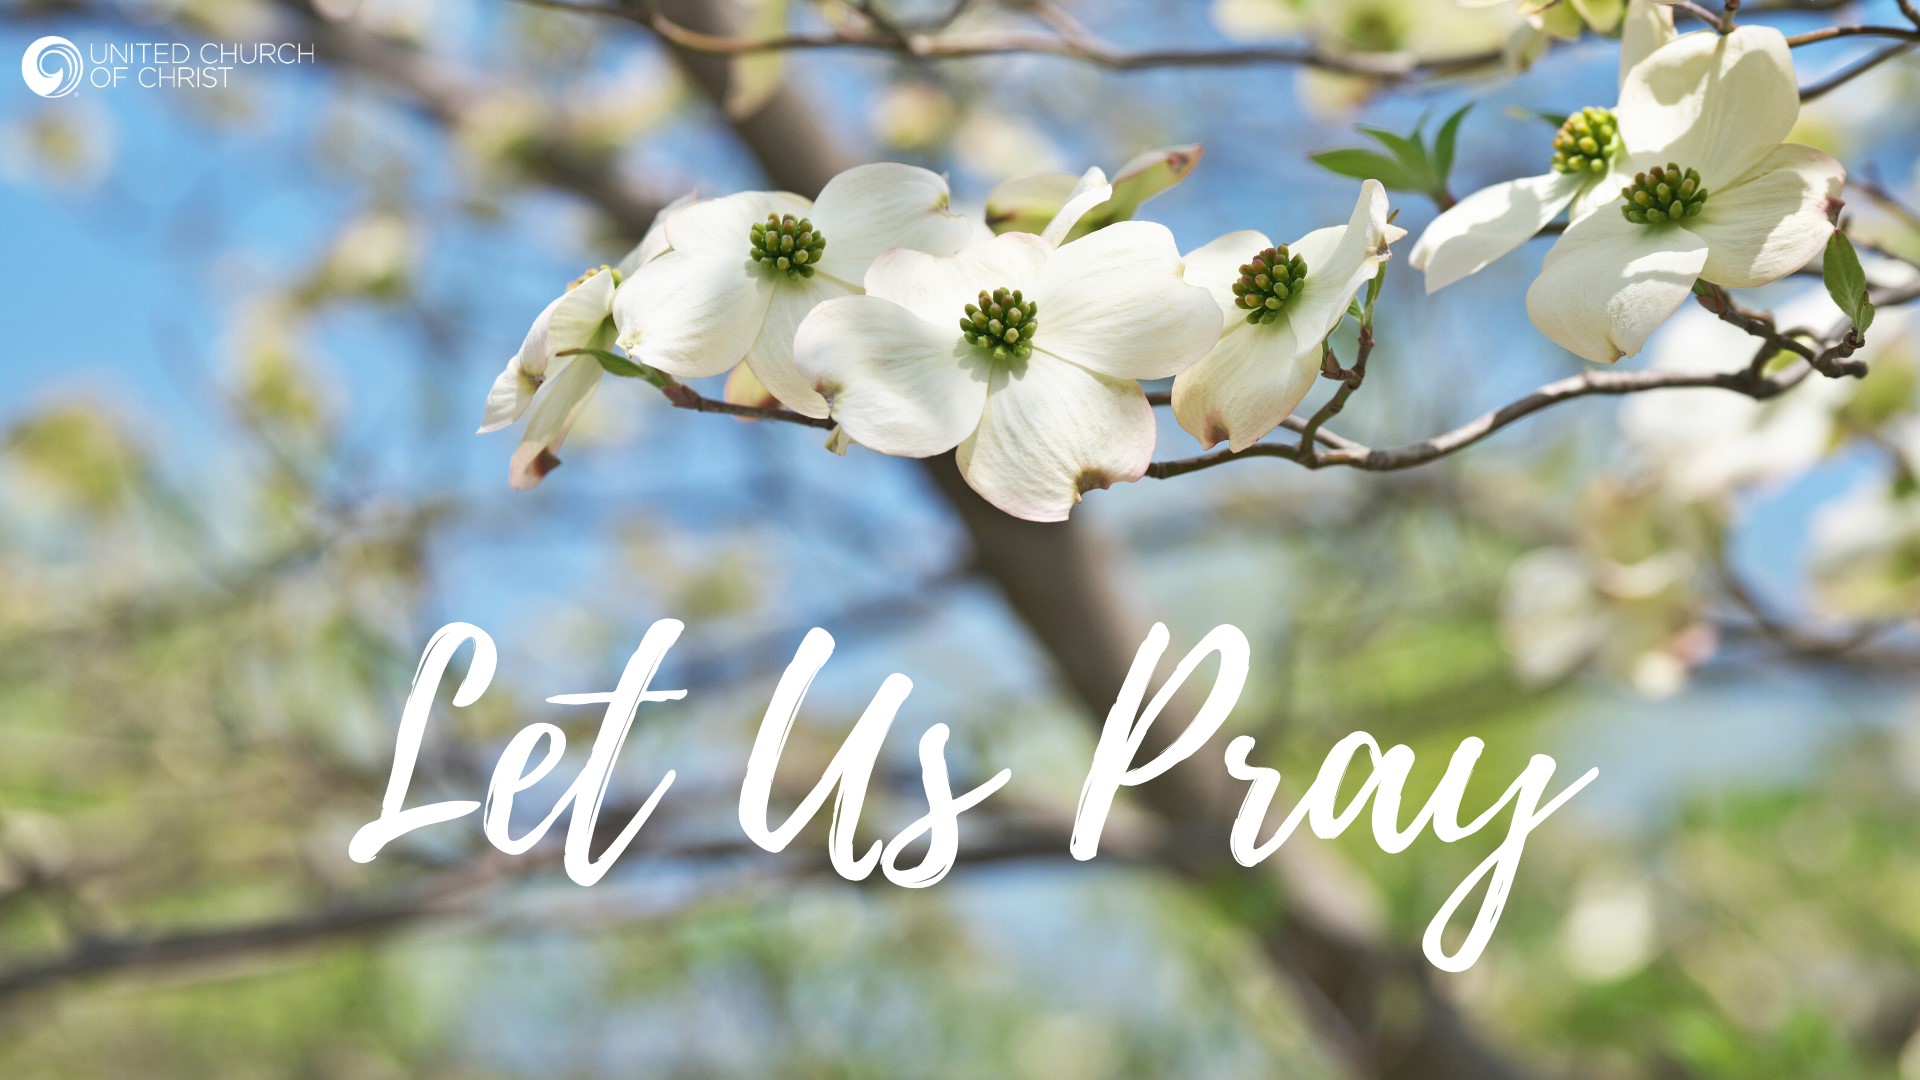 Call to Prayer image 4/5/20